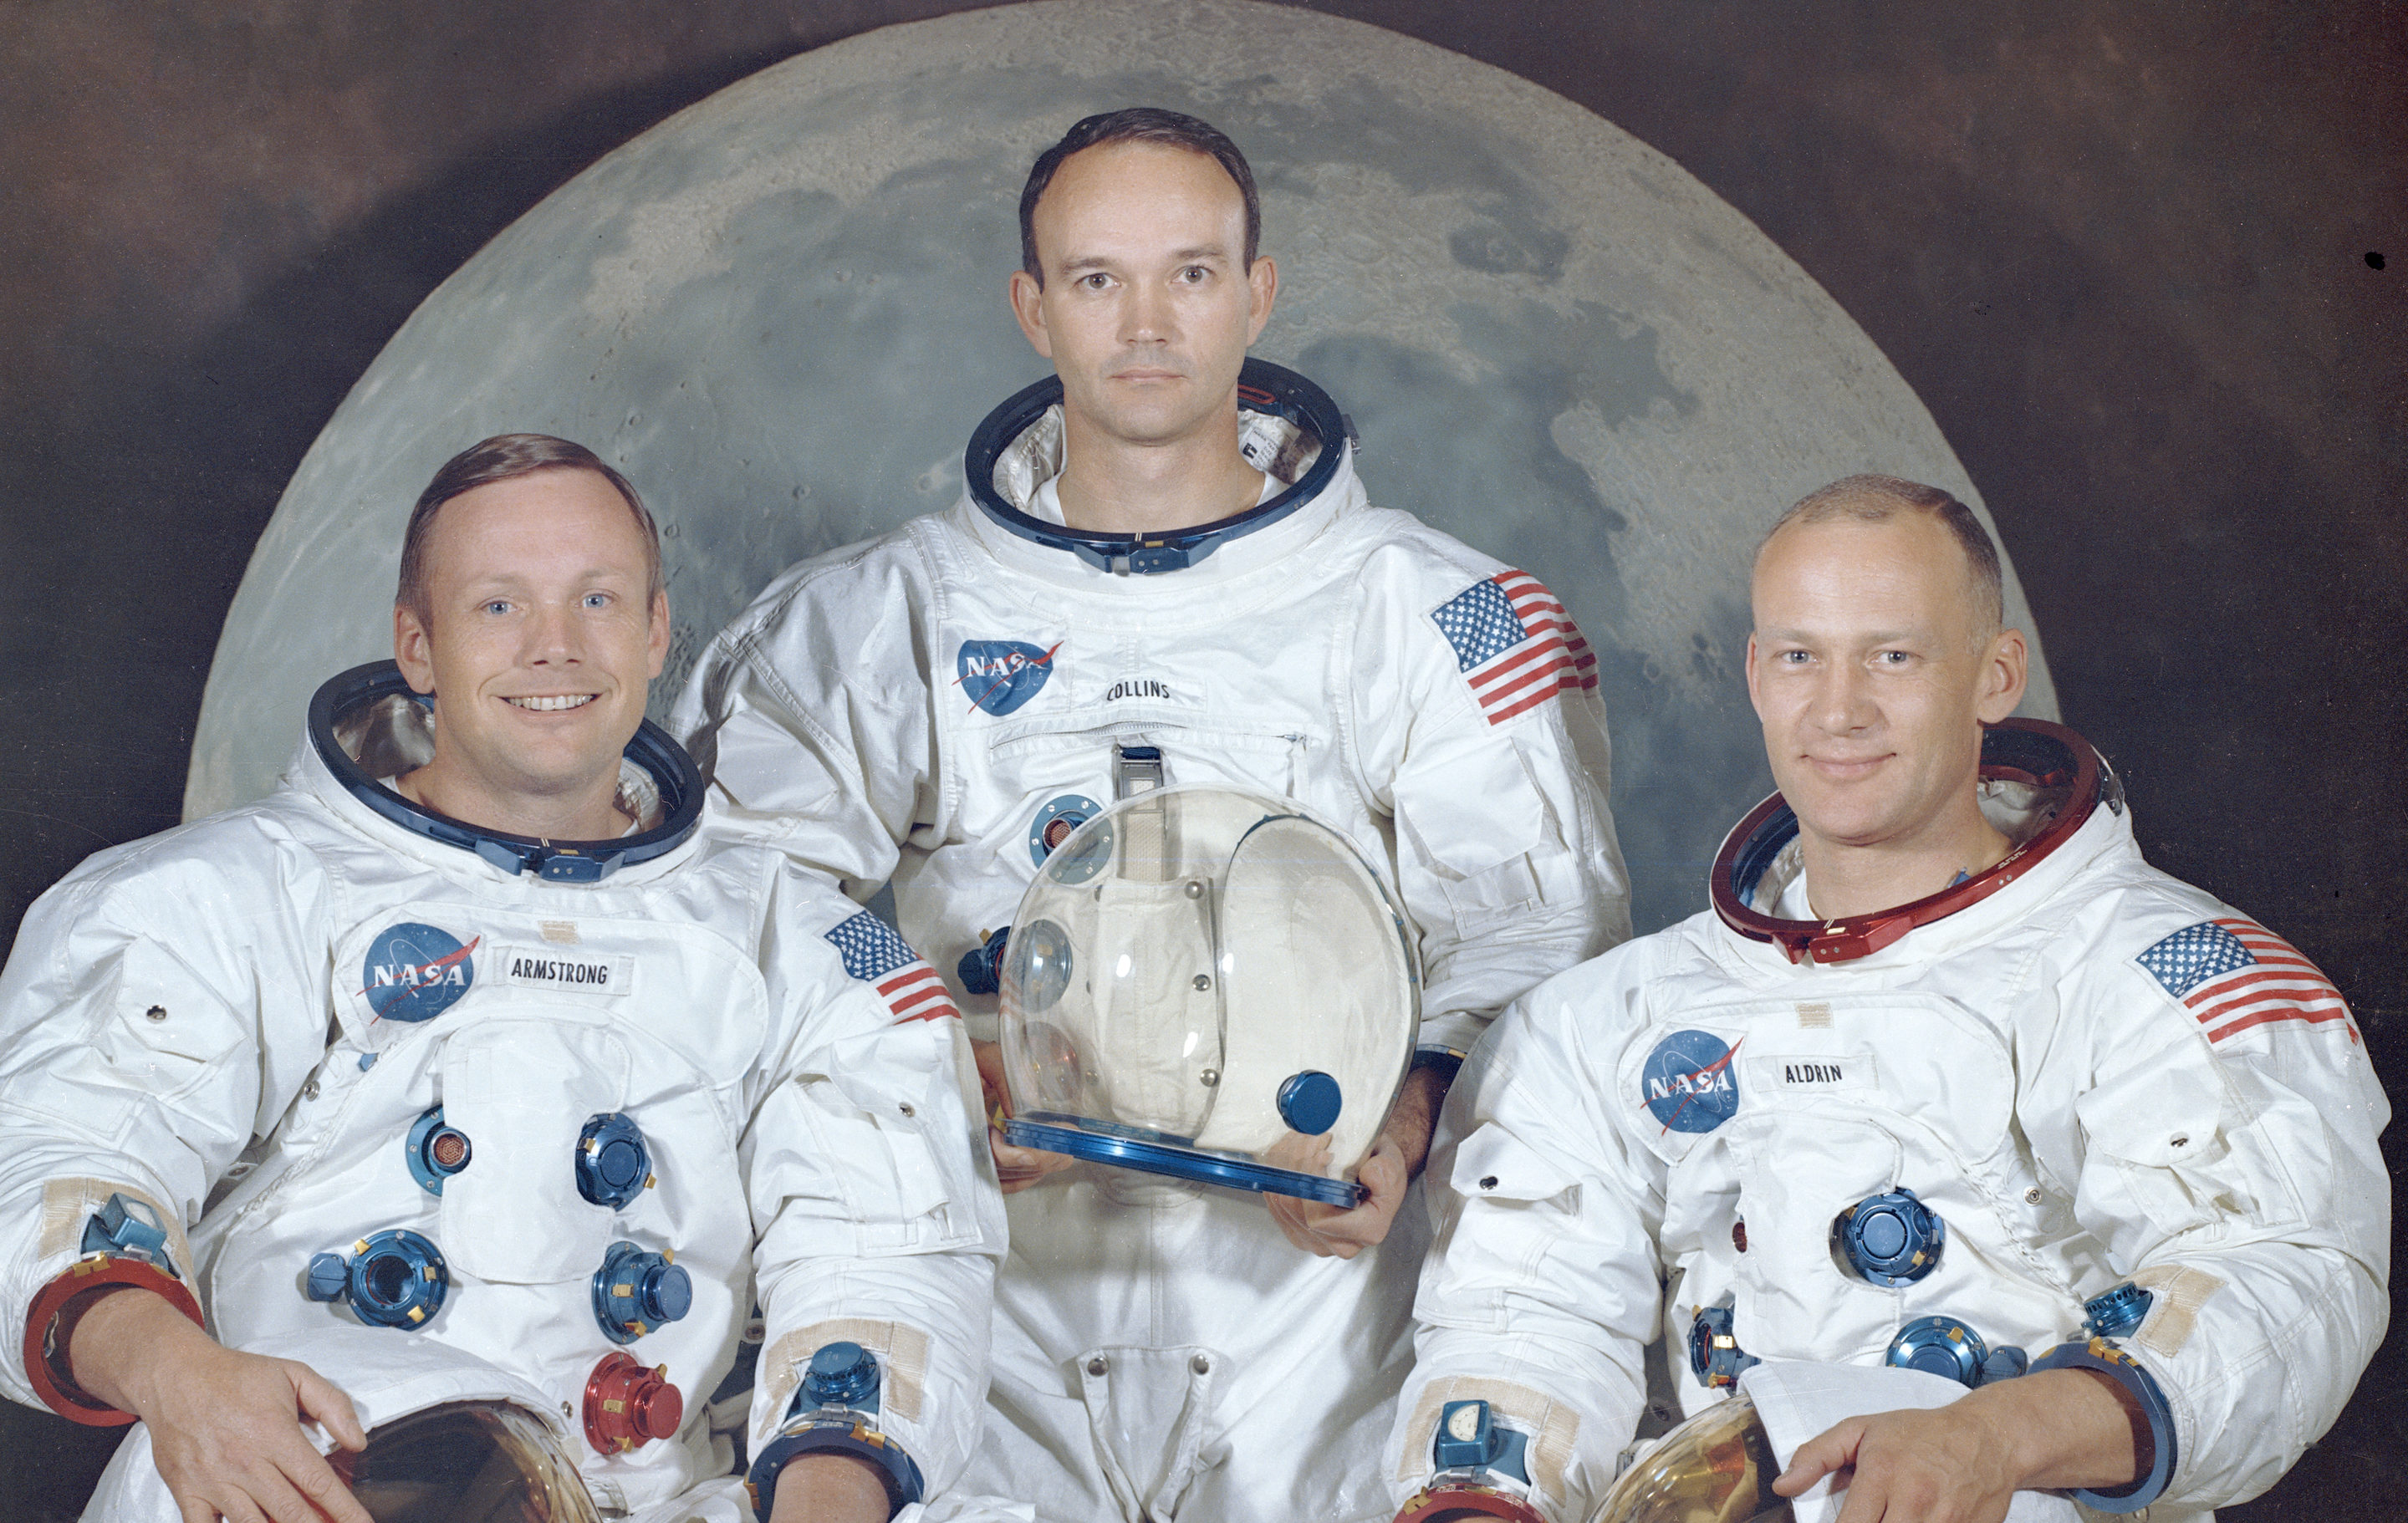 The Apollo 11 crew - Neil Armstrong, Michael Collins and Buzz Aldrin